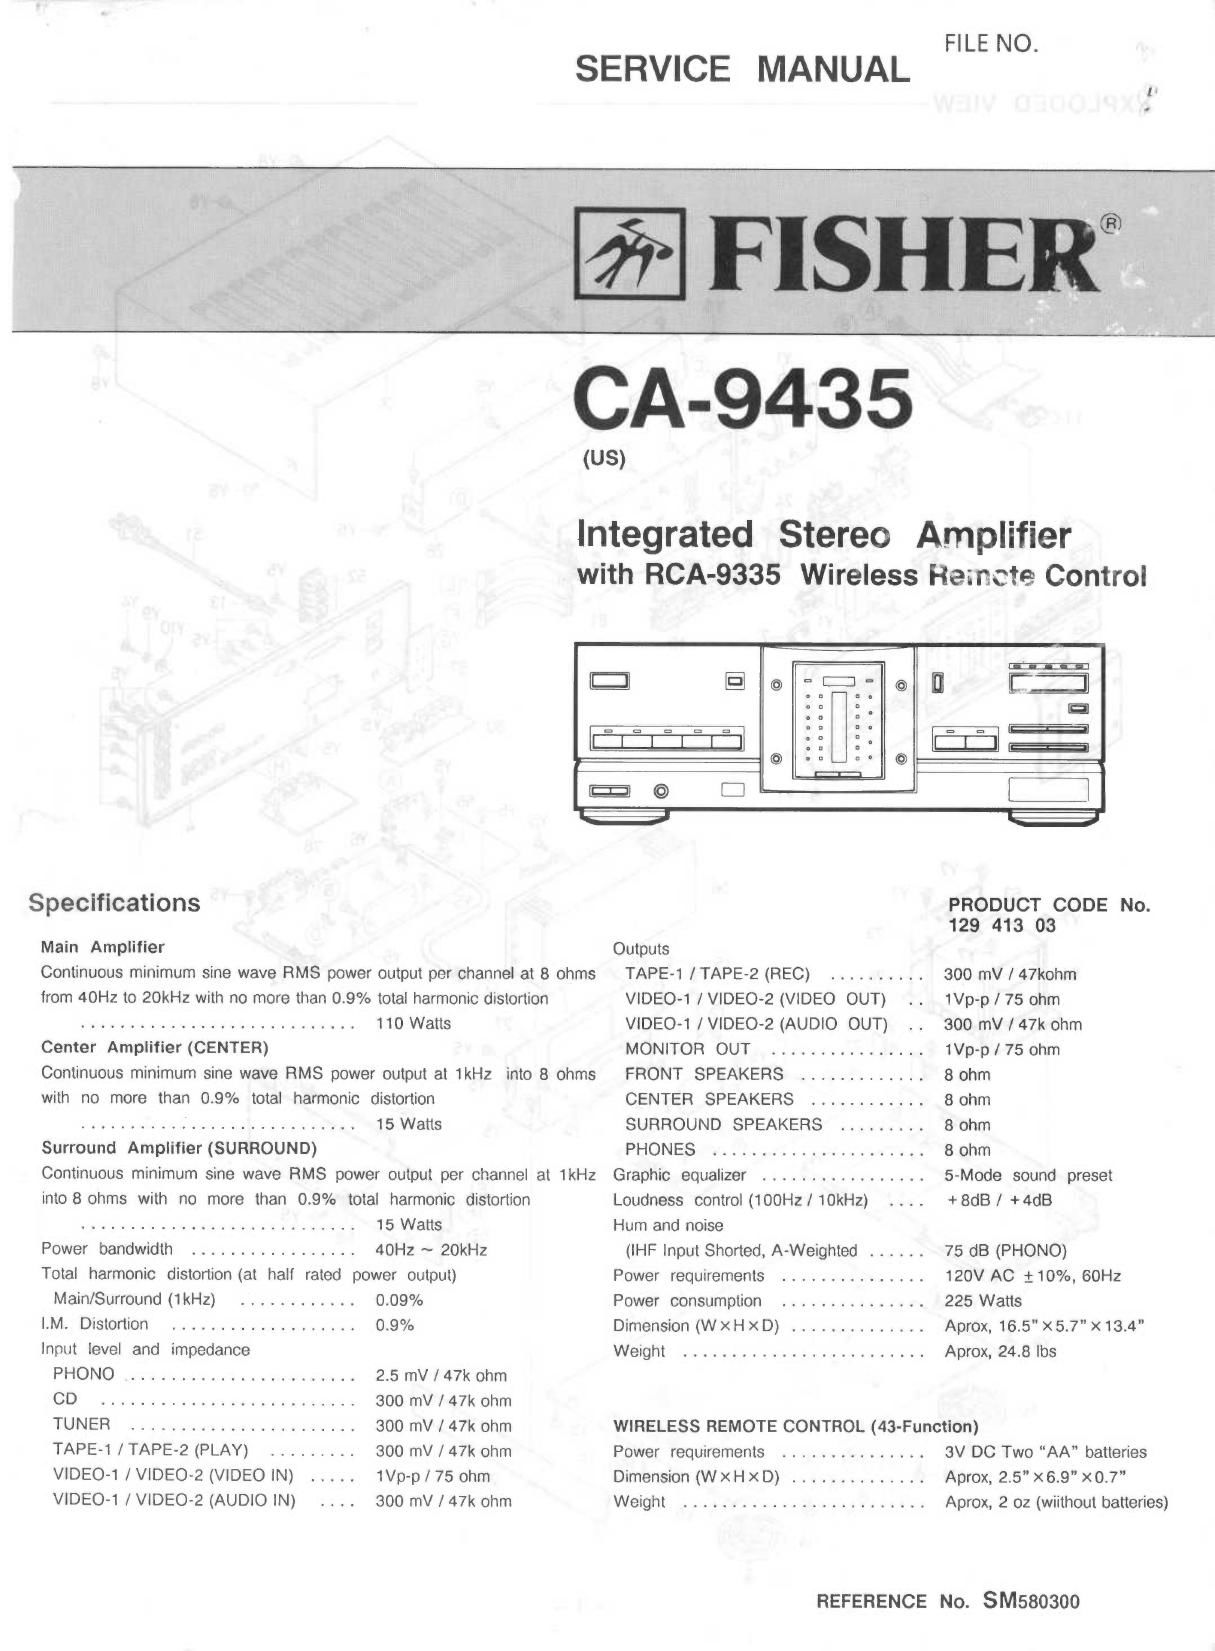 Fisher CA 9435 Service Manual